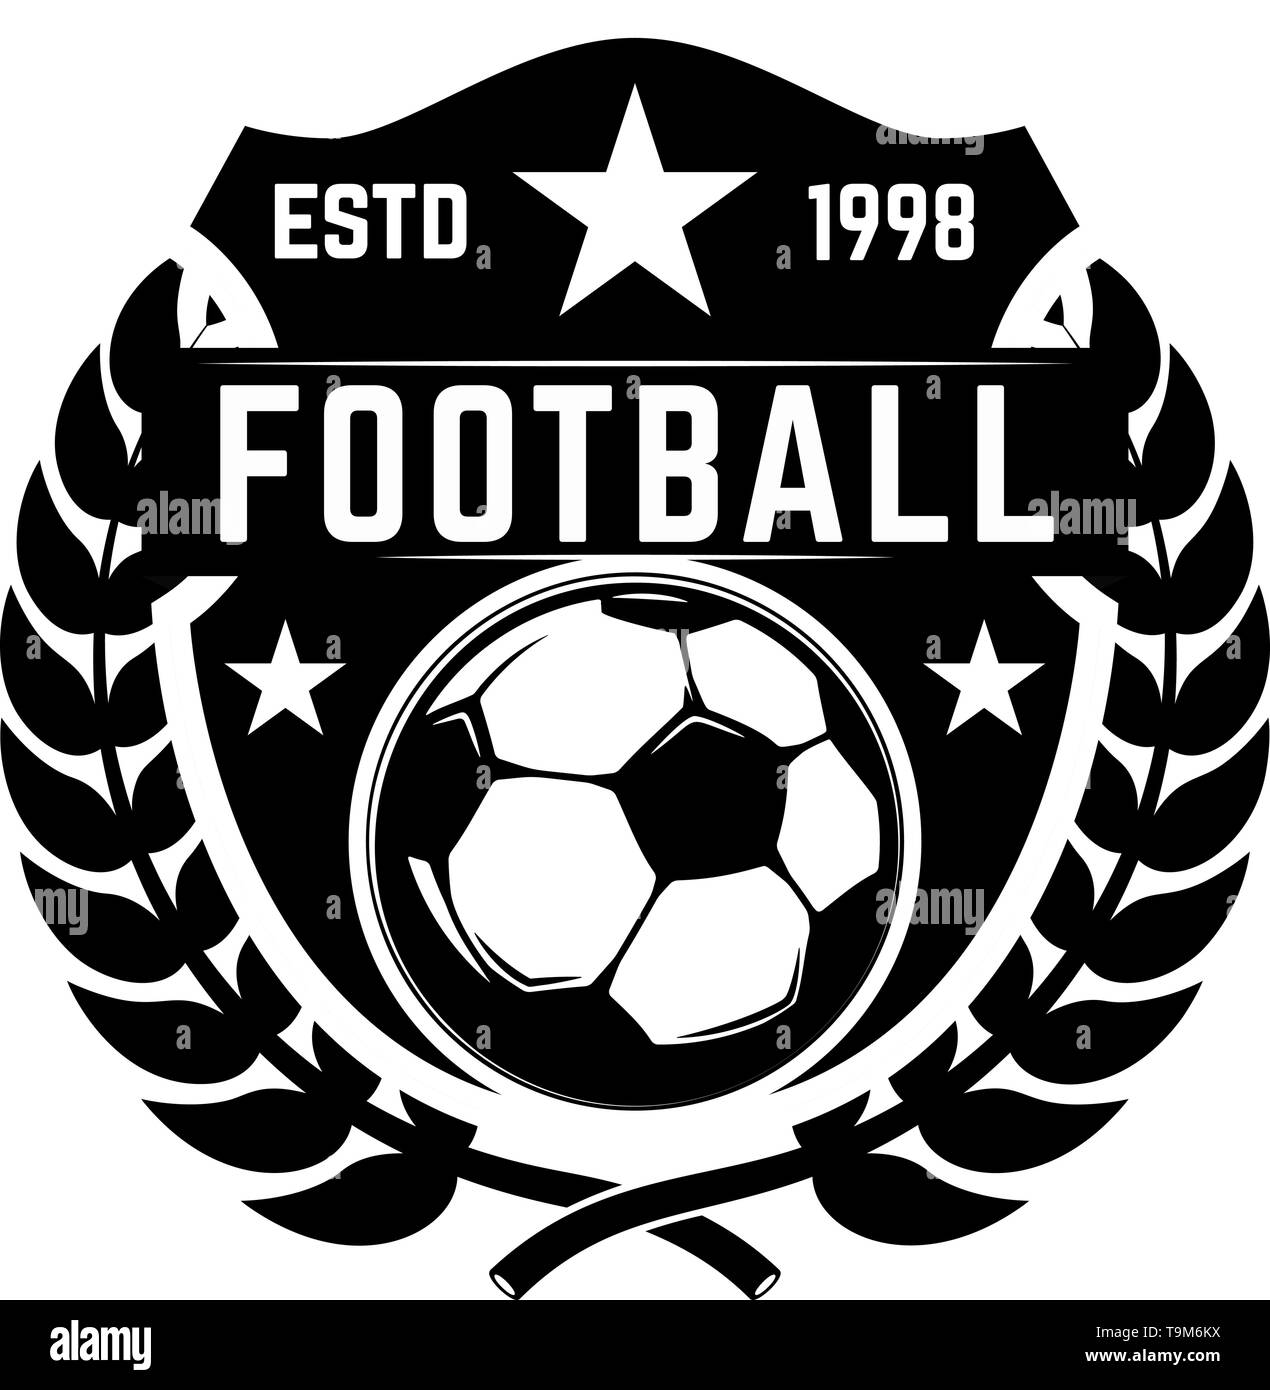 Soccer Team Symbol Drawing Stock Illustration - Download Image Now